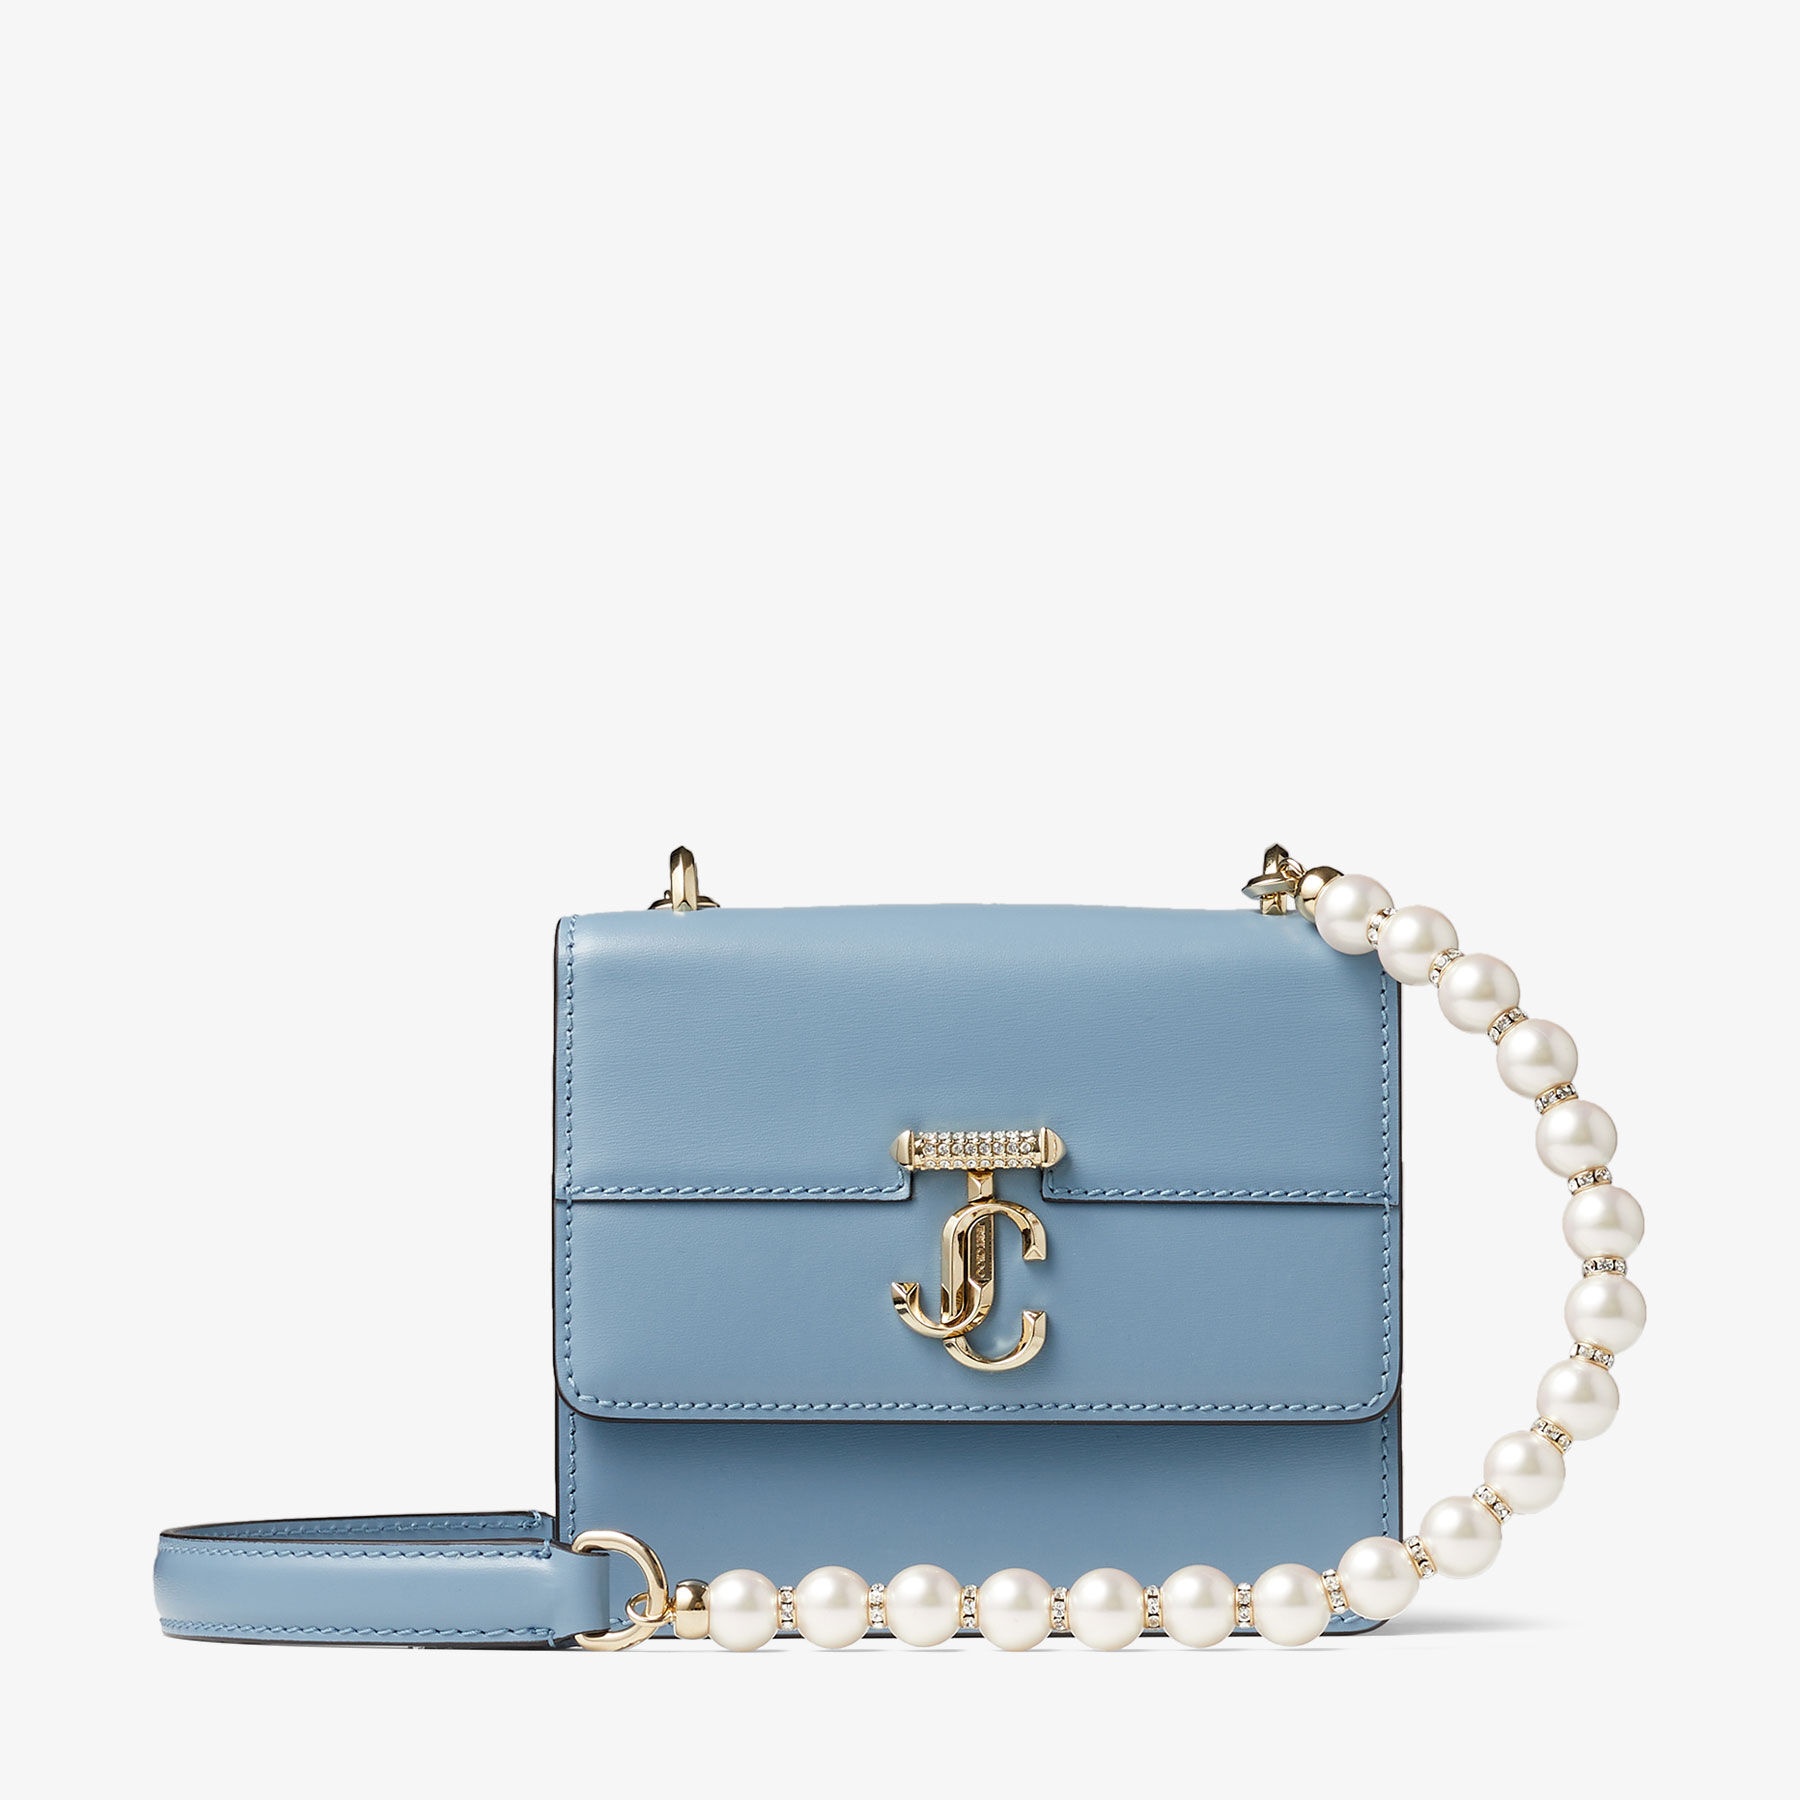 Varenne Quad XS
Smoky Blue Box Leather Shoulder Bag with Pearl Strap - 1